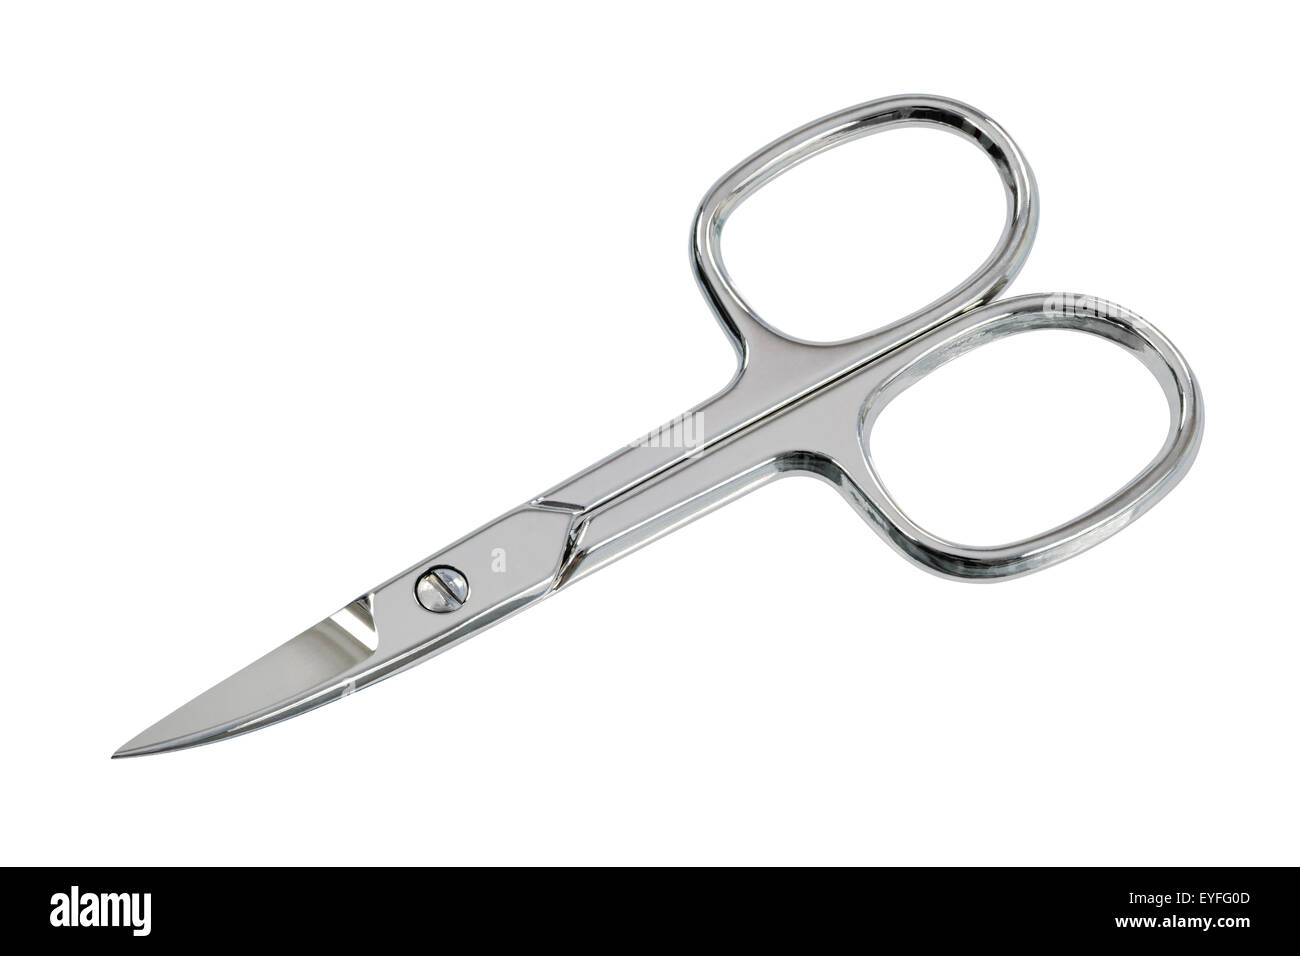 Small scissors shear clippers Stock Photo